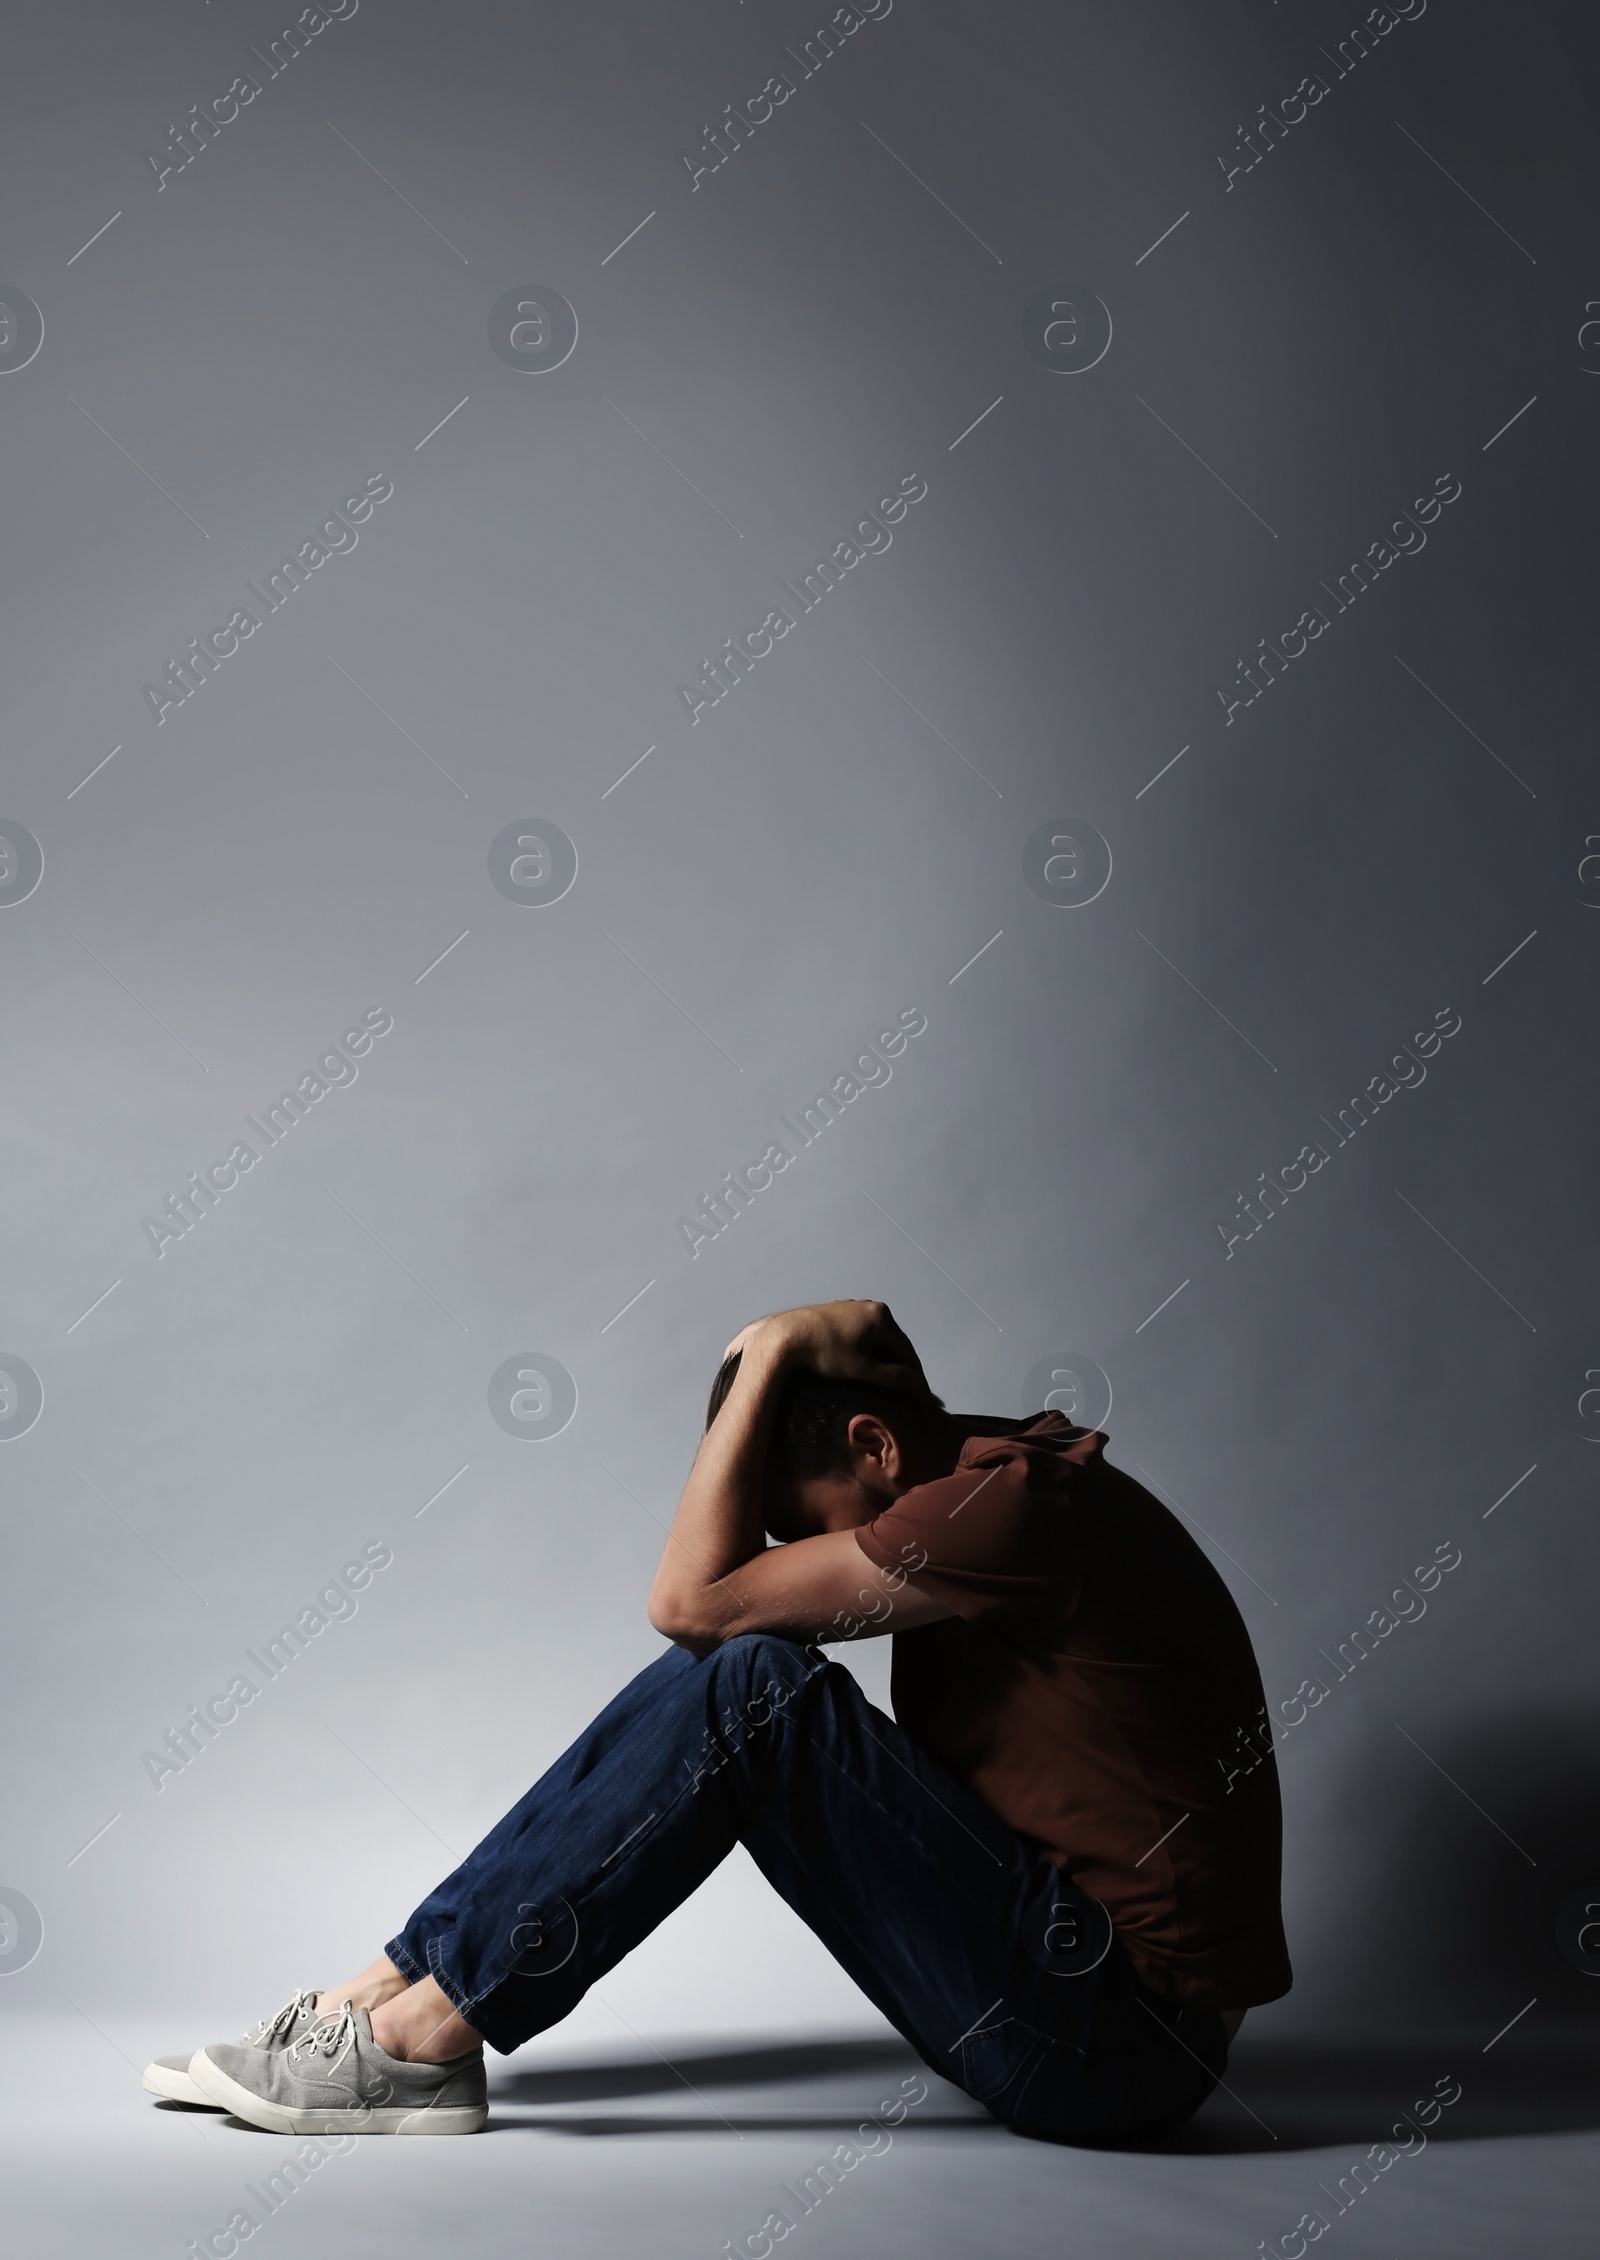 Photo of Lonely depressed man sitting on grey background